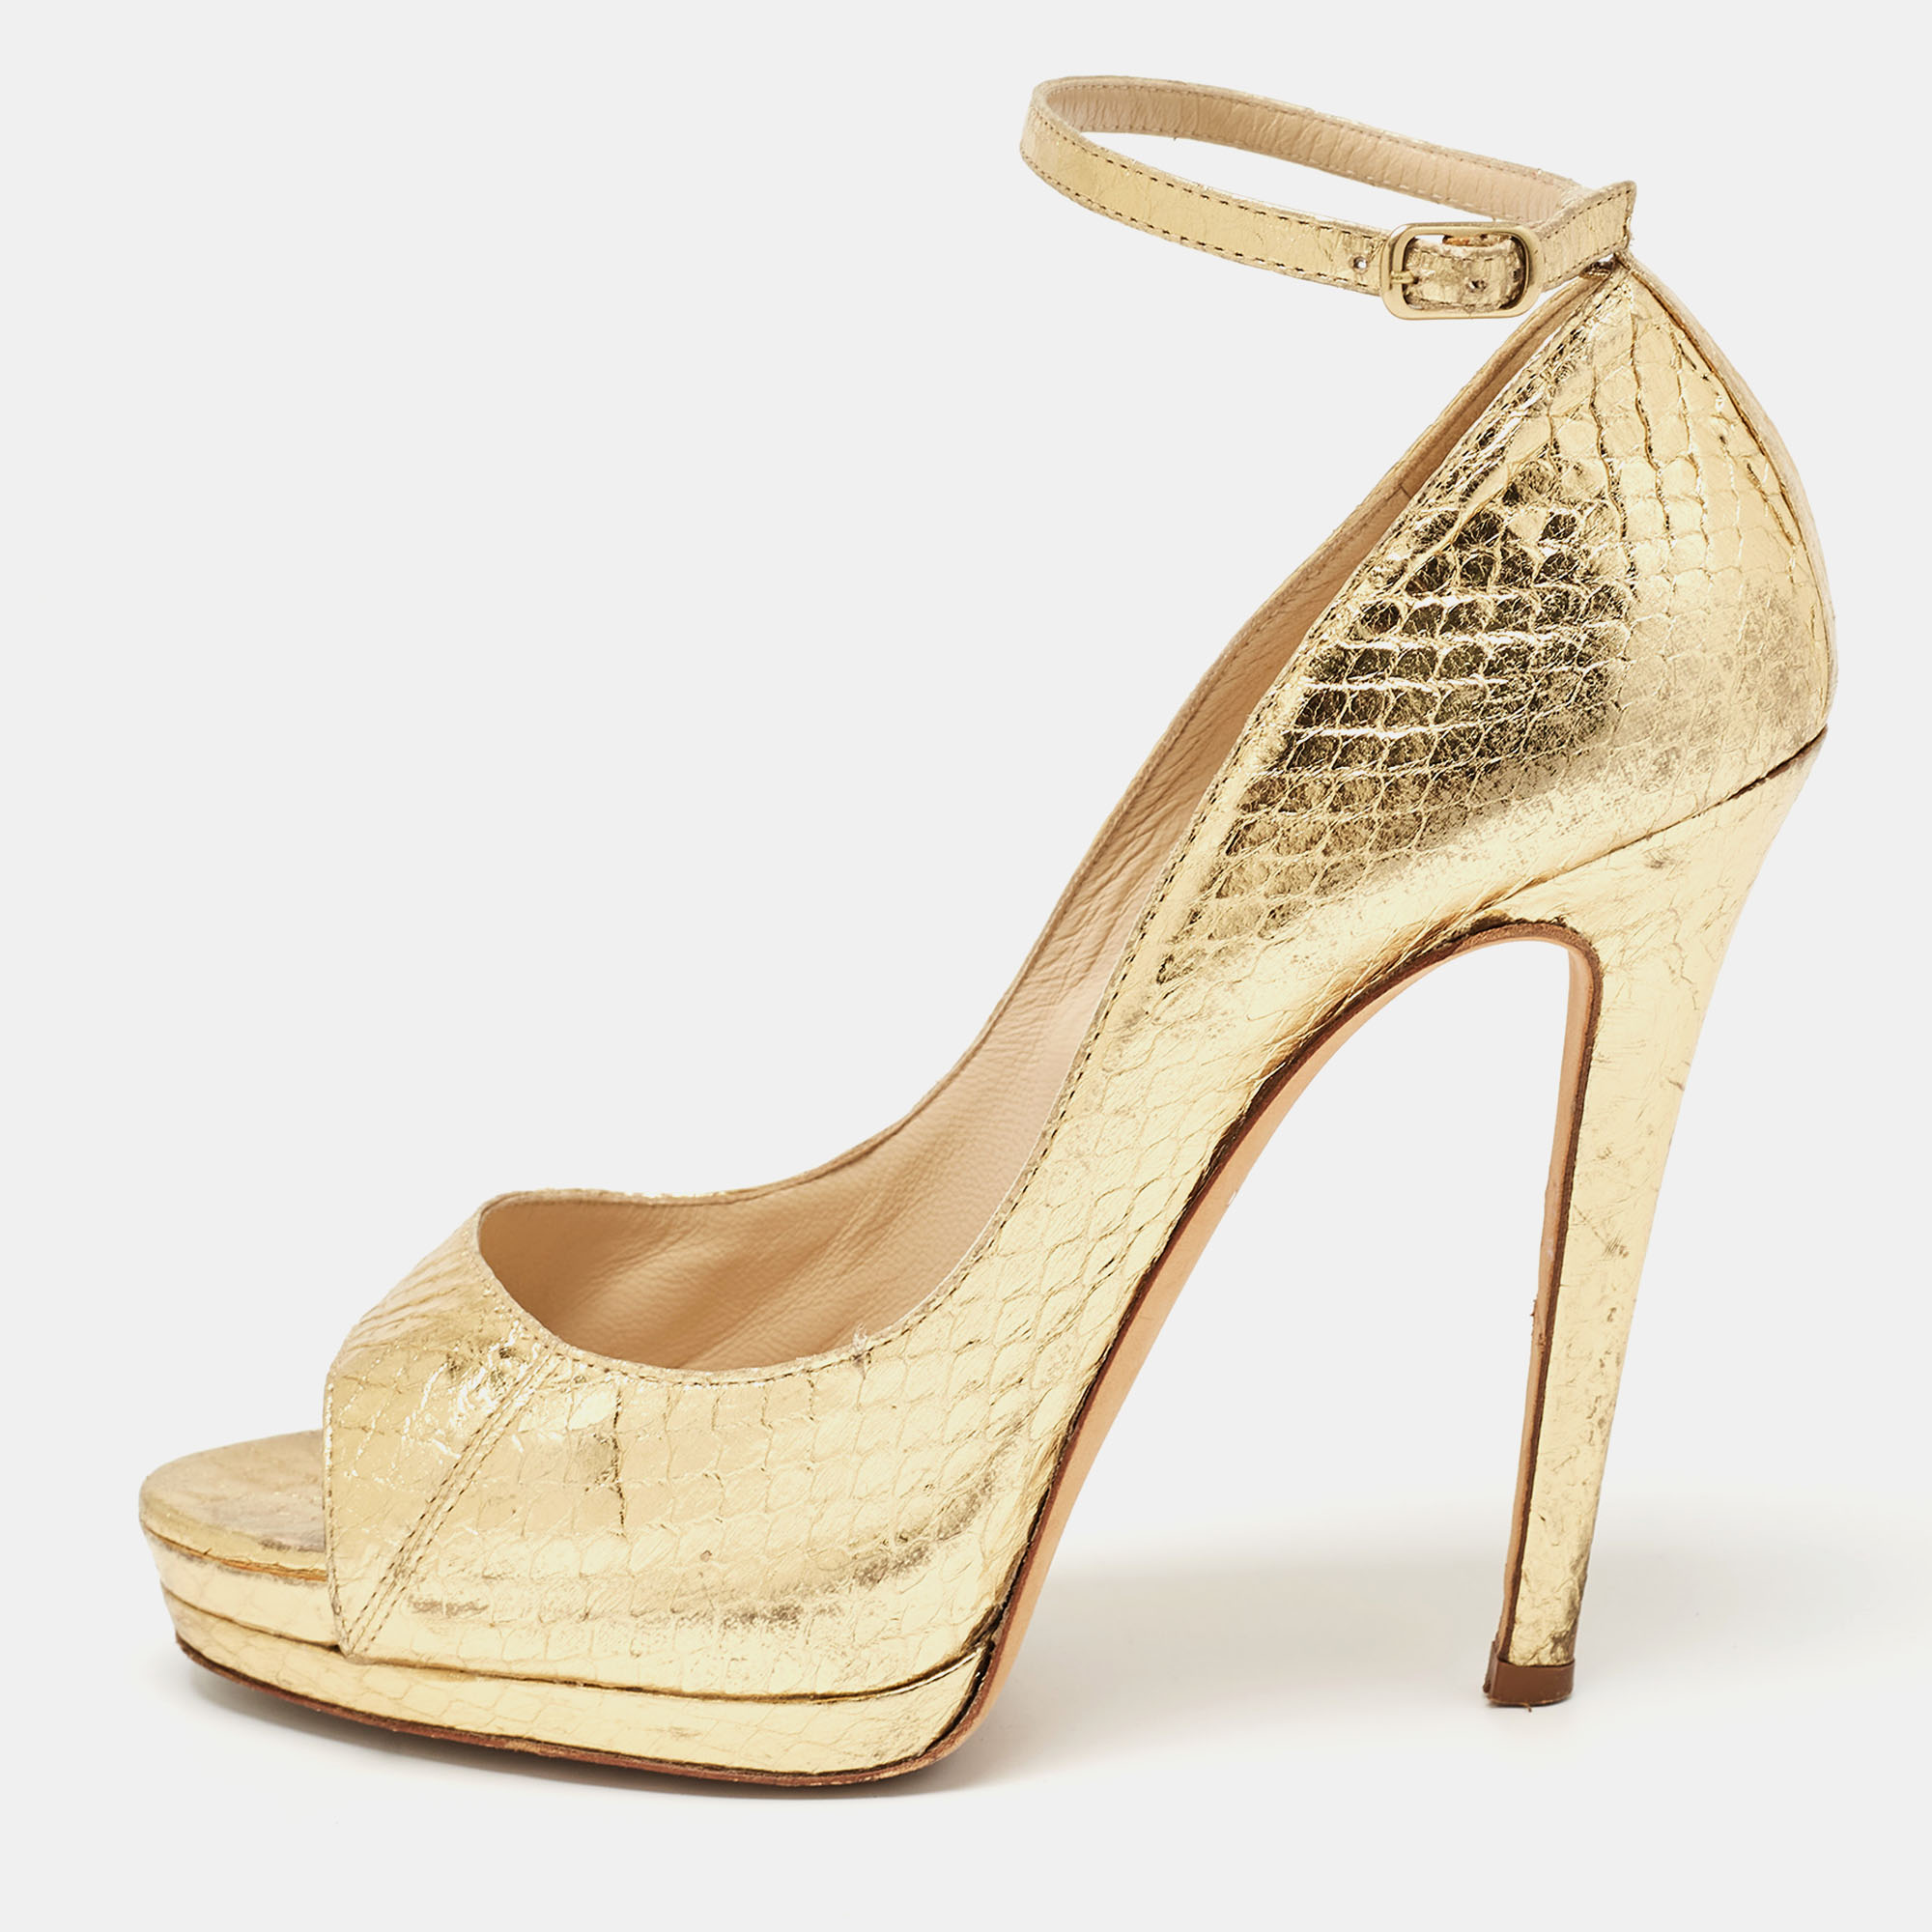 Oscar de la renta metallic gold python embossed peep toe ankle strap pumps size 37.5